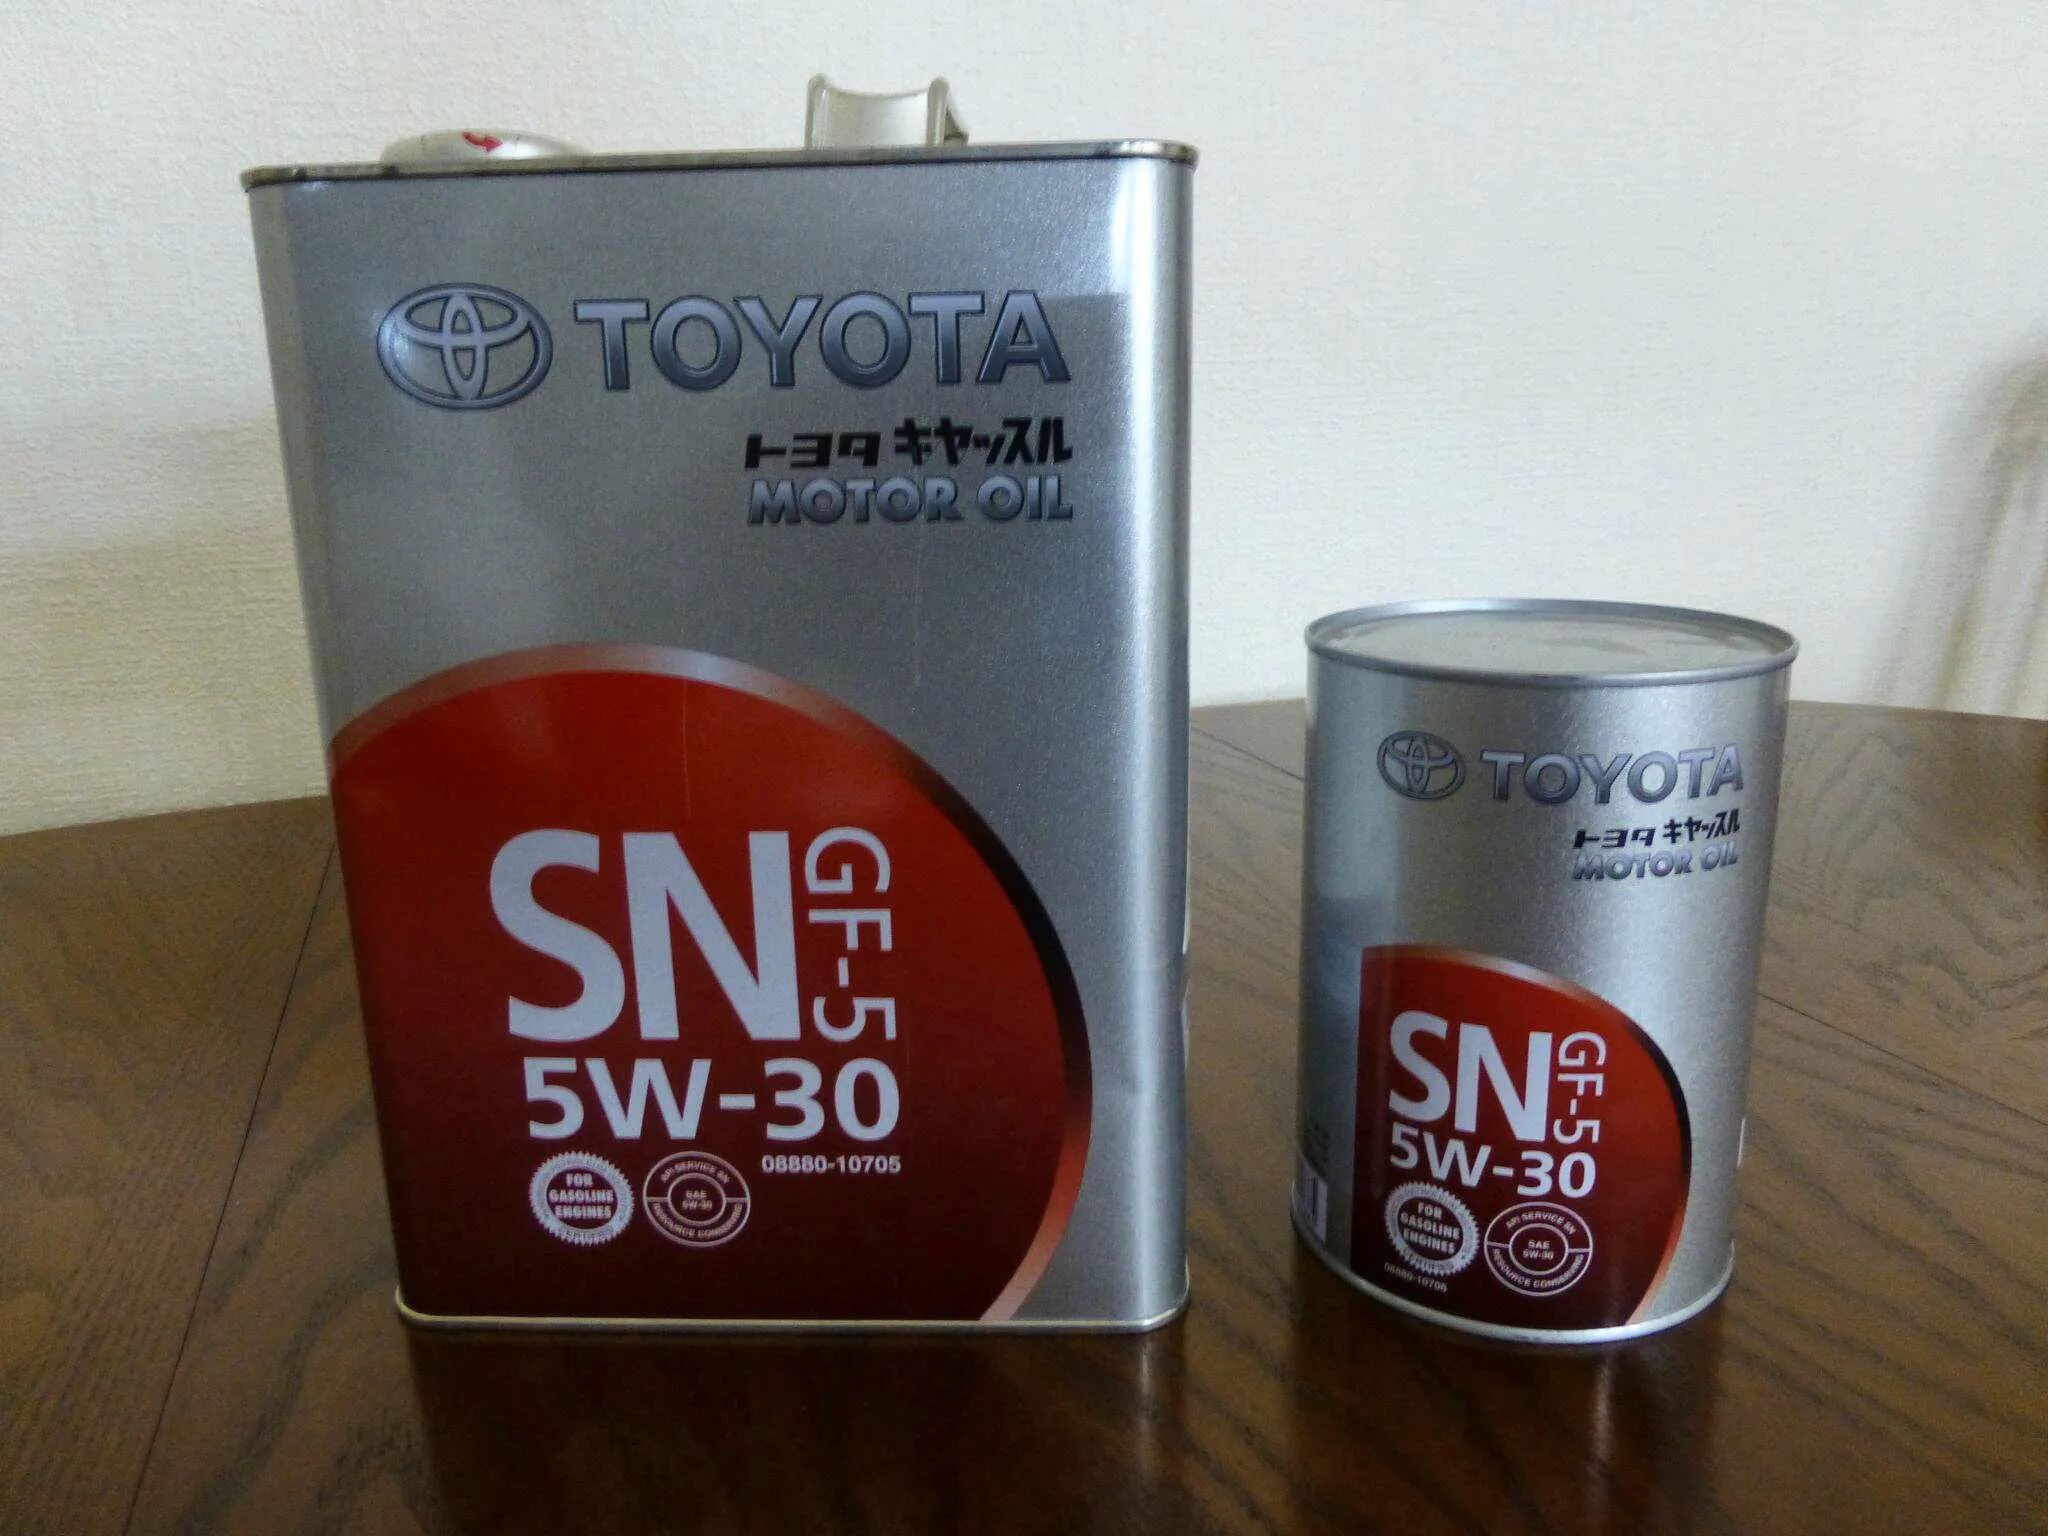 Toyota sp 5w30. Toyota Motor Oil 5w-30. Синтетическое моторное масло Toyota SN 5w-30, 4 л. Масло Toyota 5w30 gf-6a.